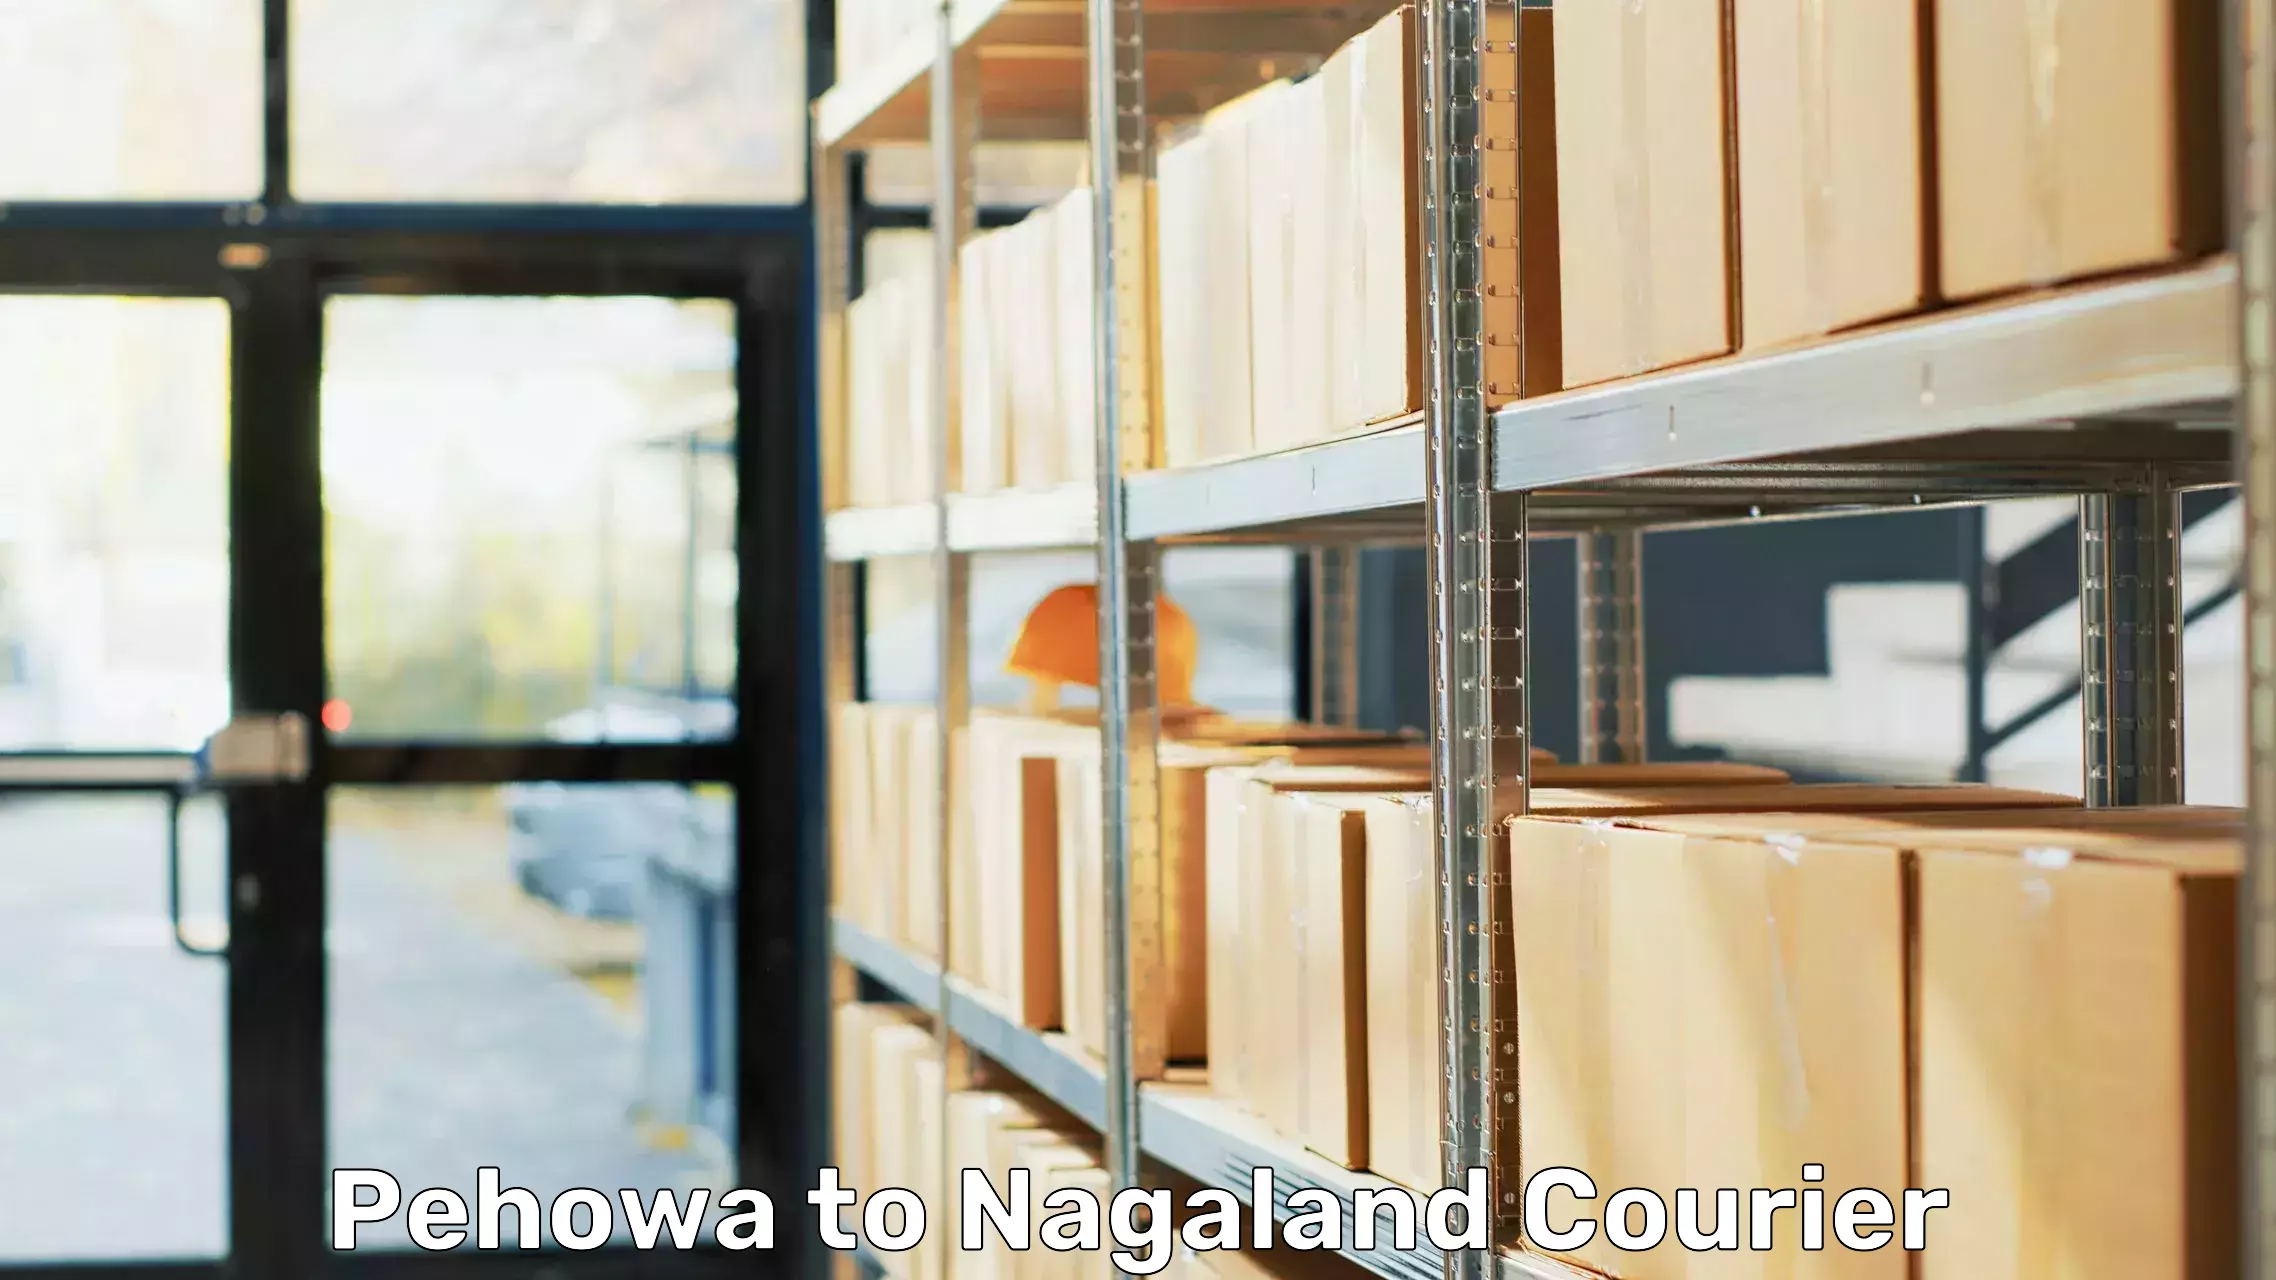 Professional moving company Pehowa to Nagaland